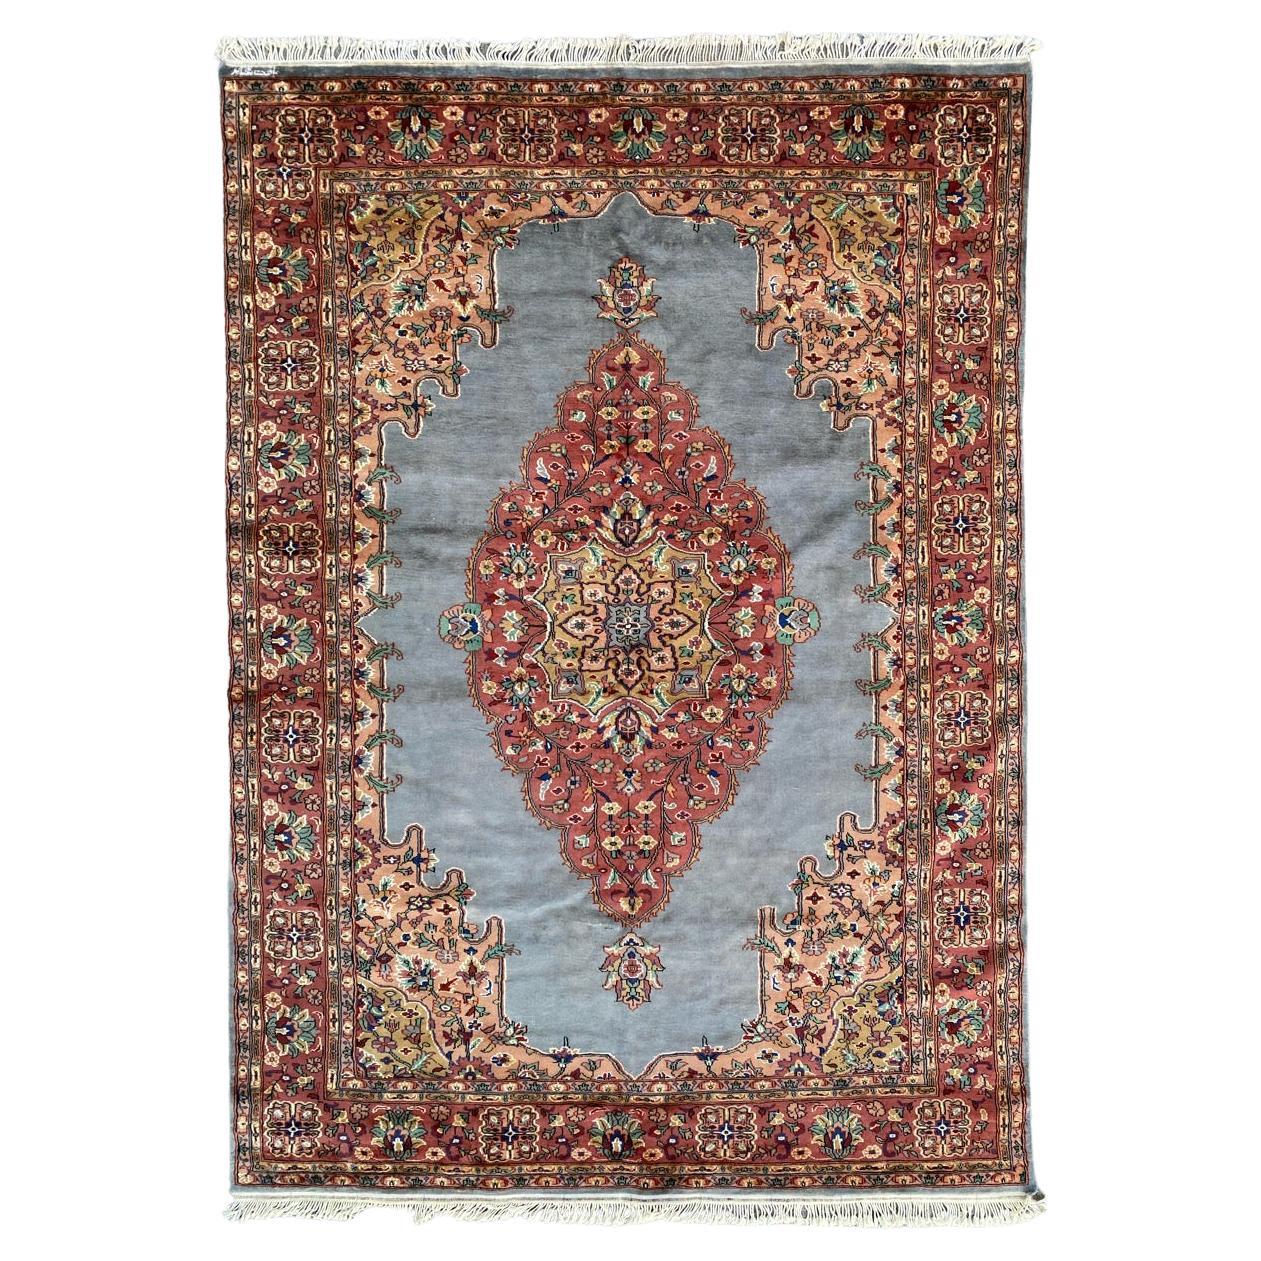 Le joli tapis pakistanais vintage de Bobyrug